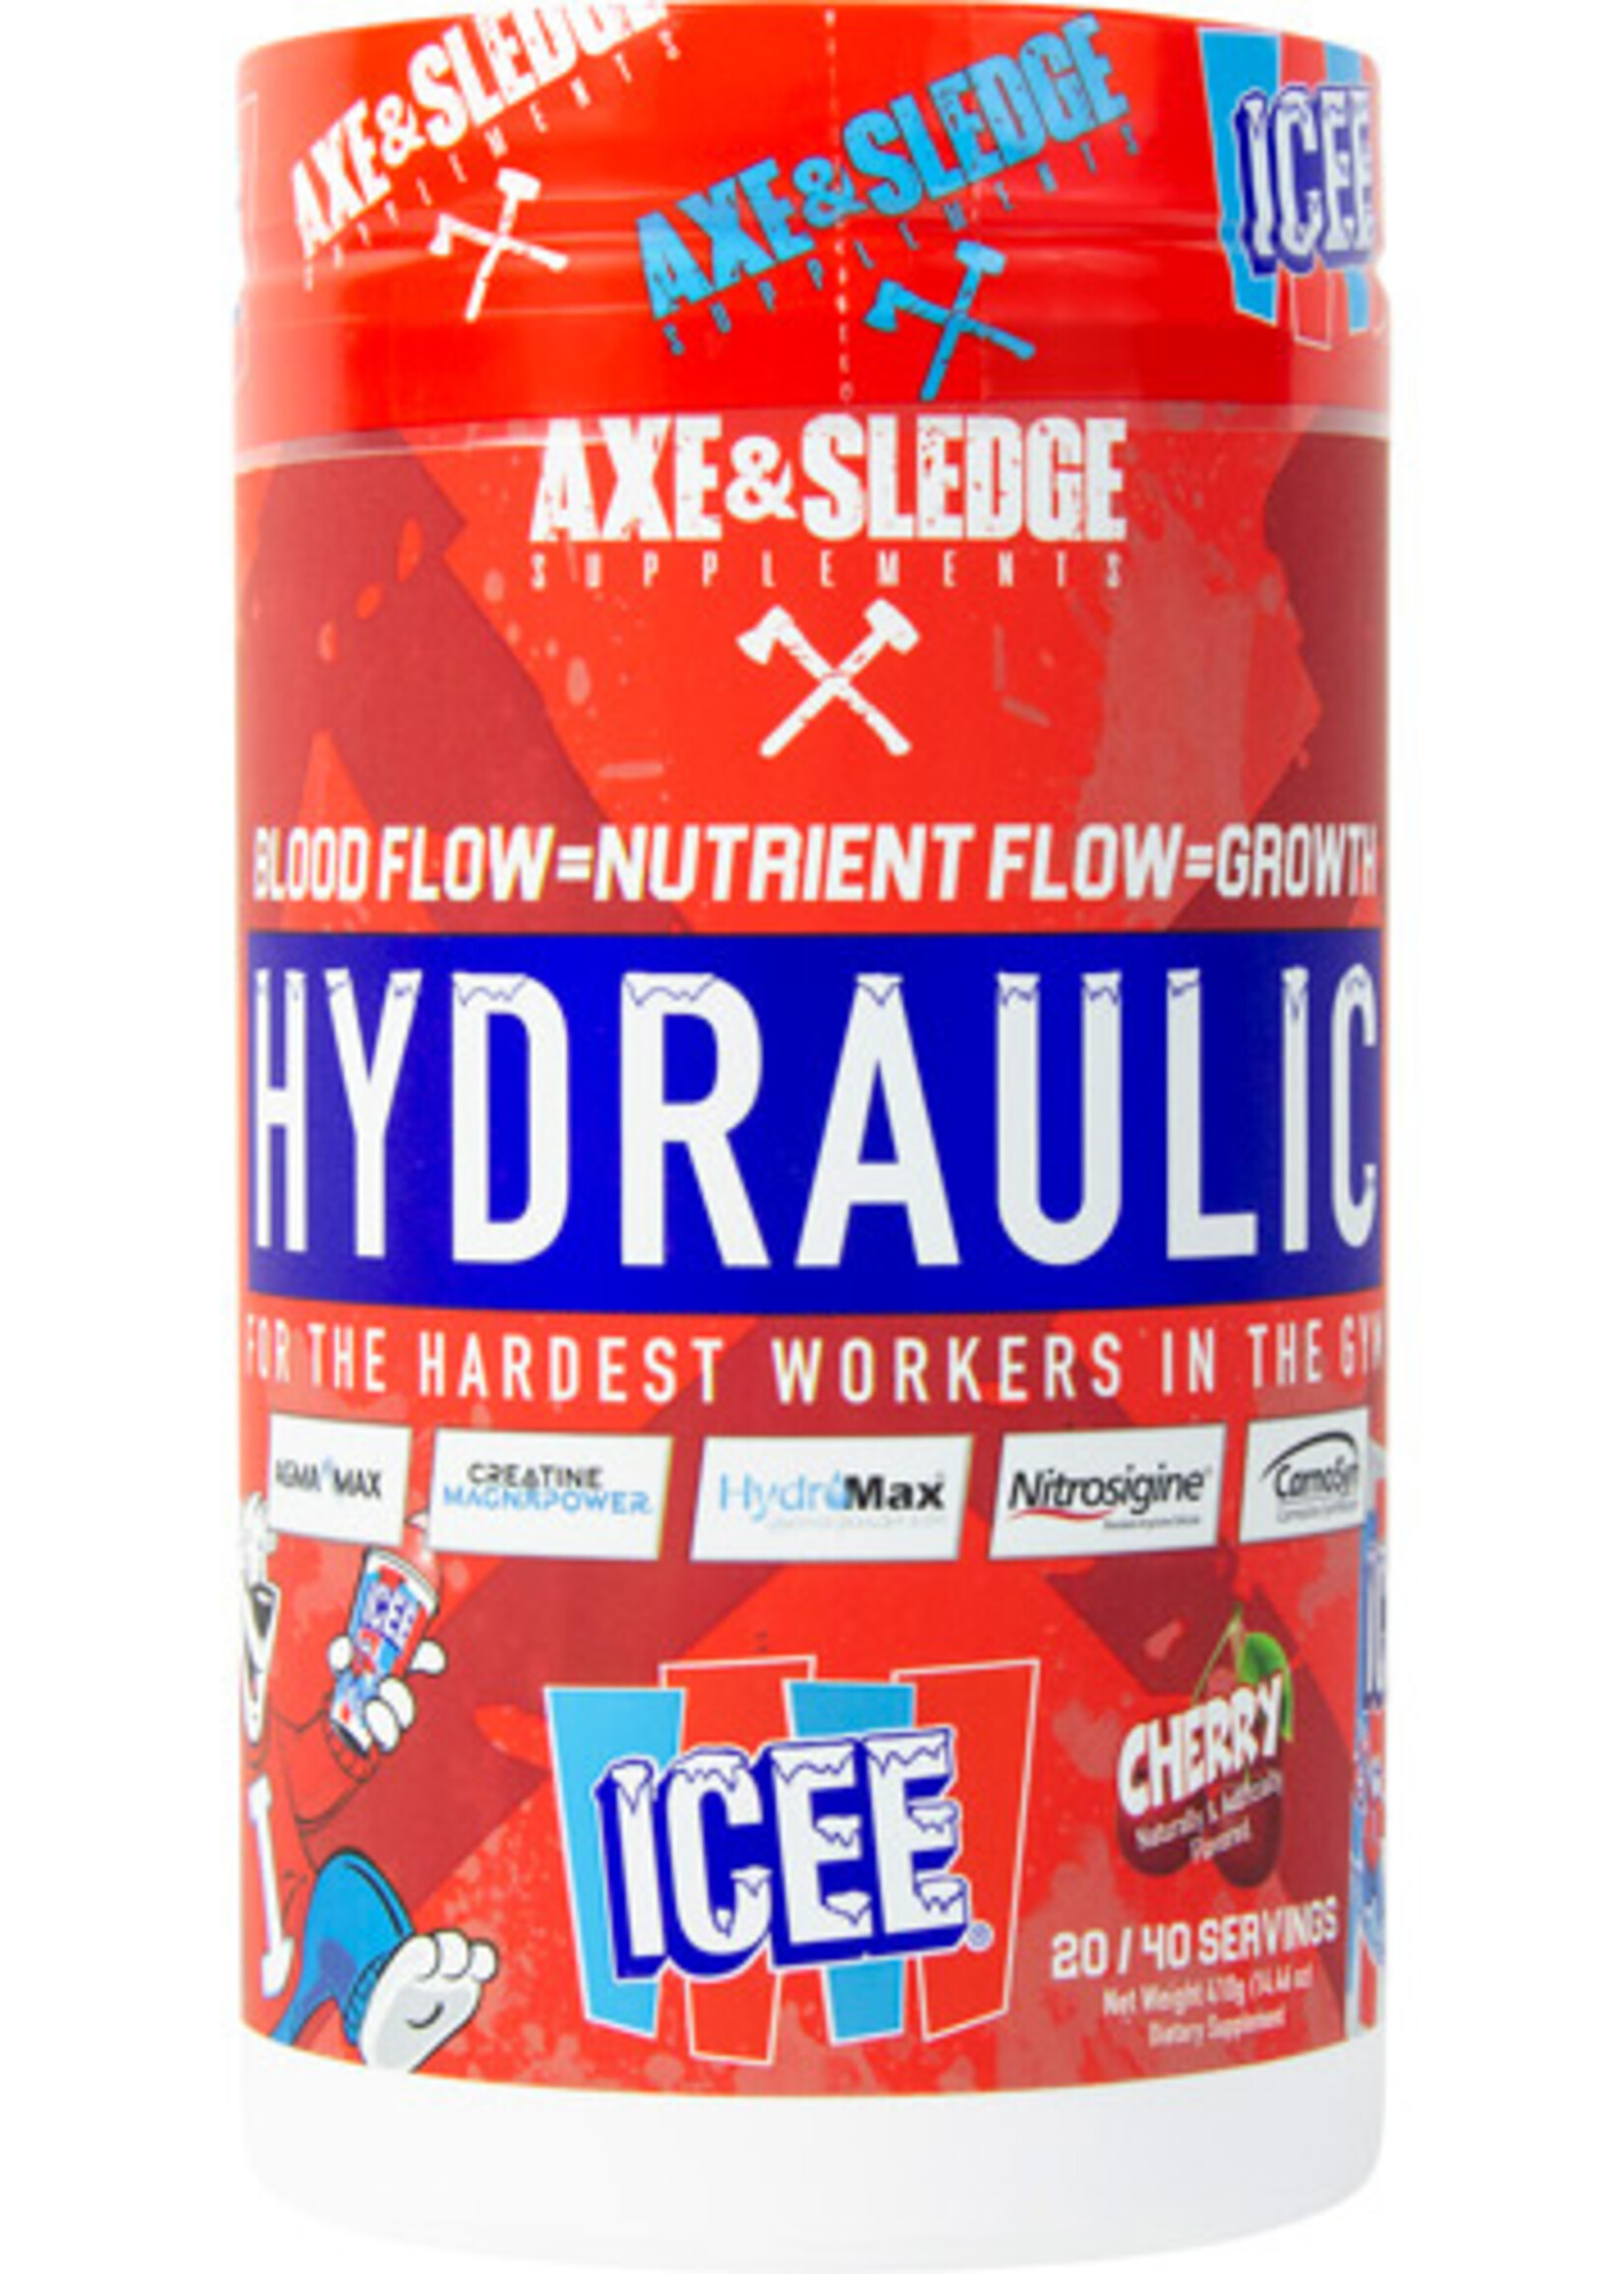 Axe & Sledge Hydraulic Cherry Icee